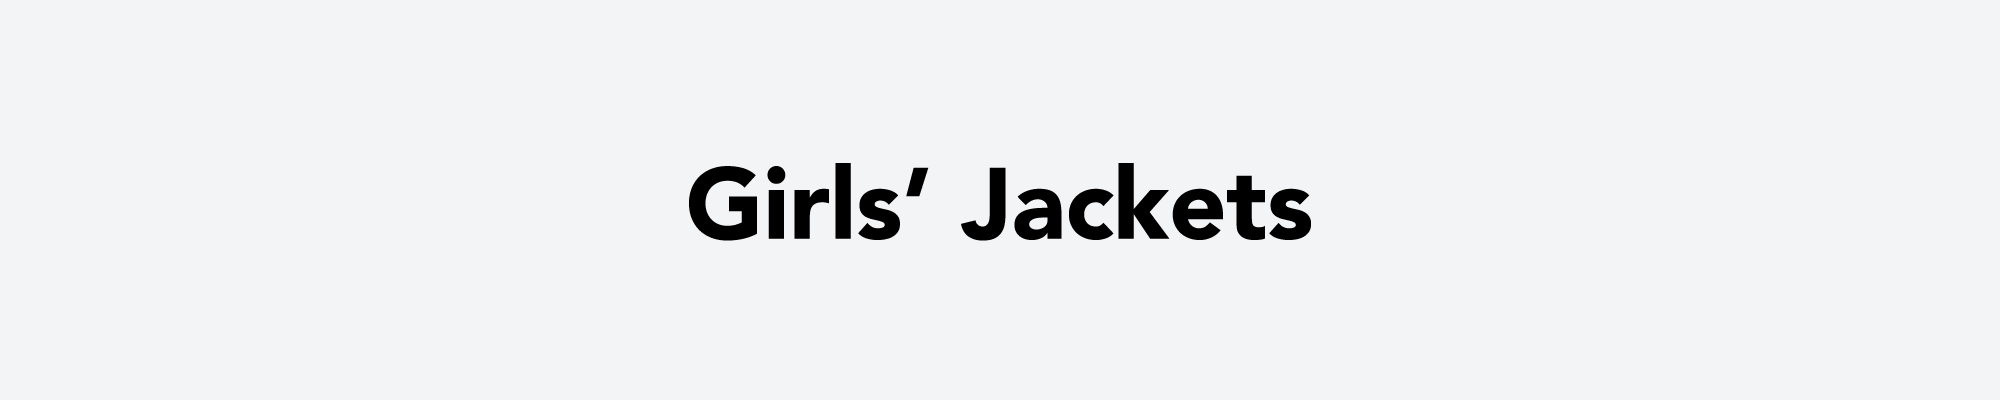 Girls' Jackets